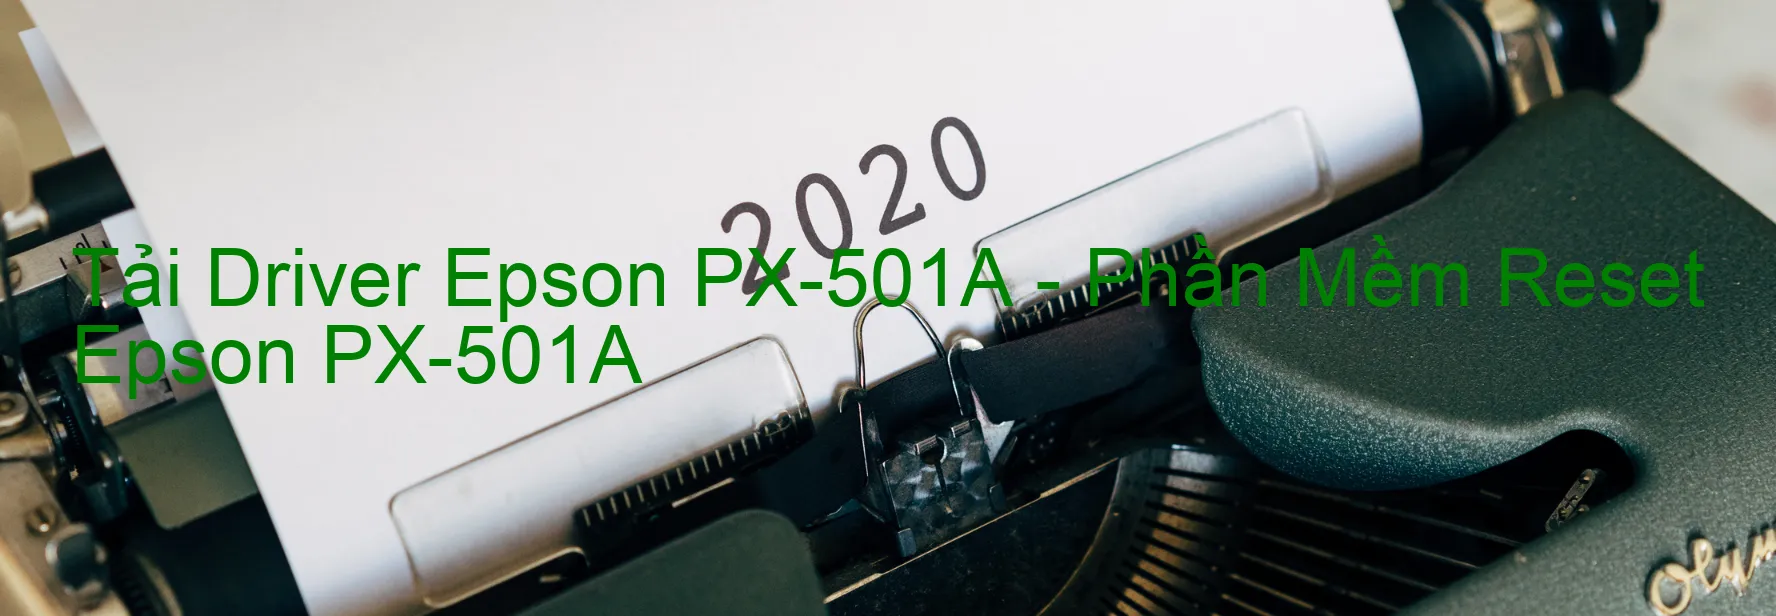 Driver Epson PX-501A, Phần Mềm Reset Epson PX-501A